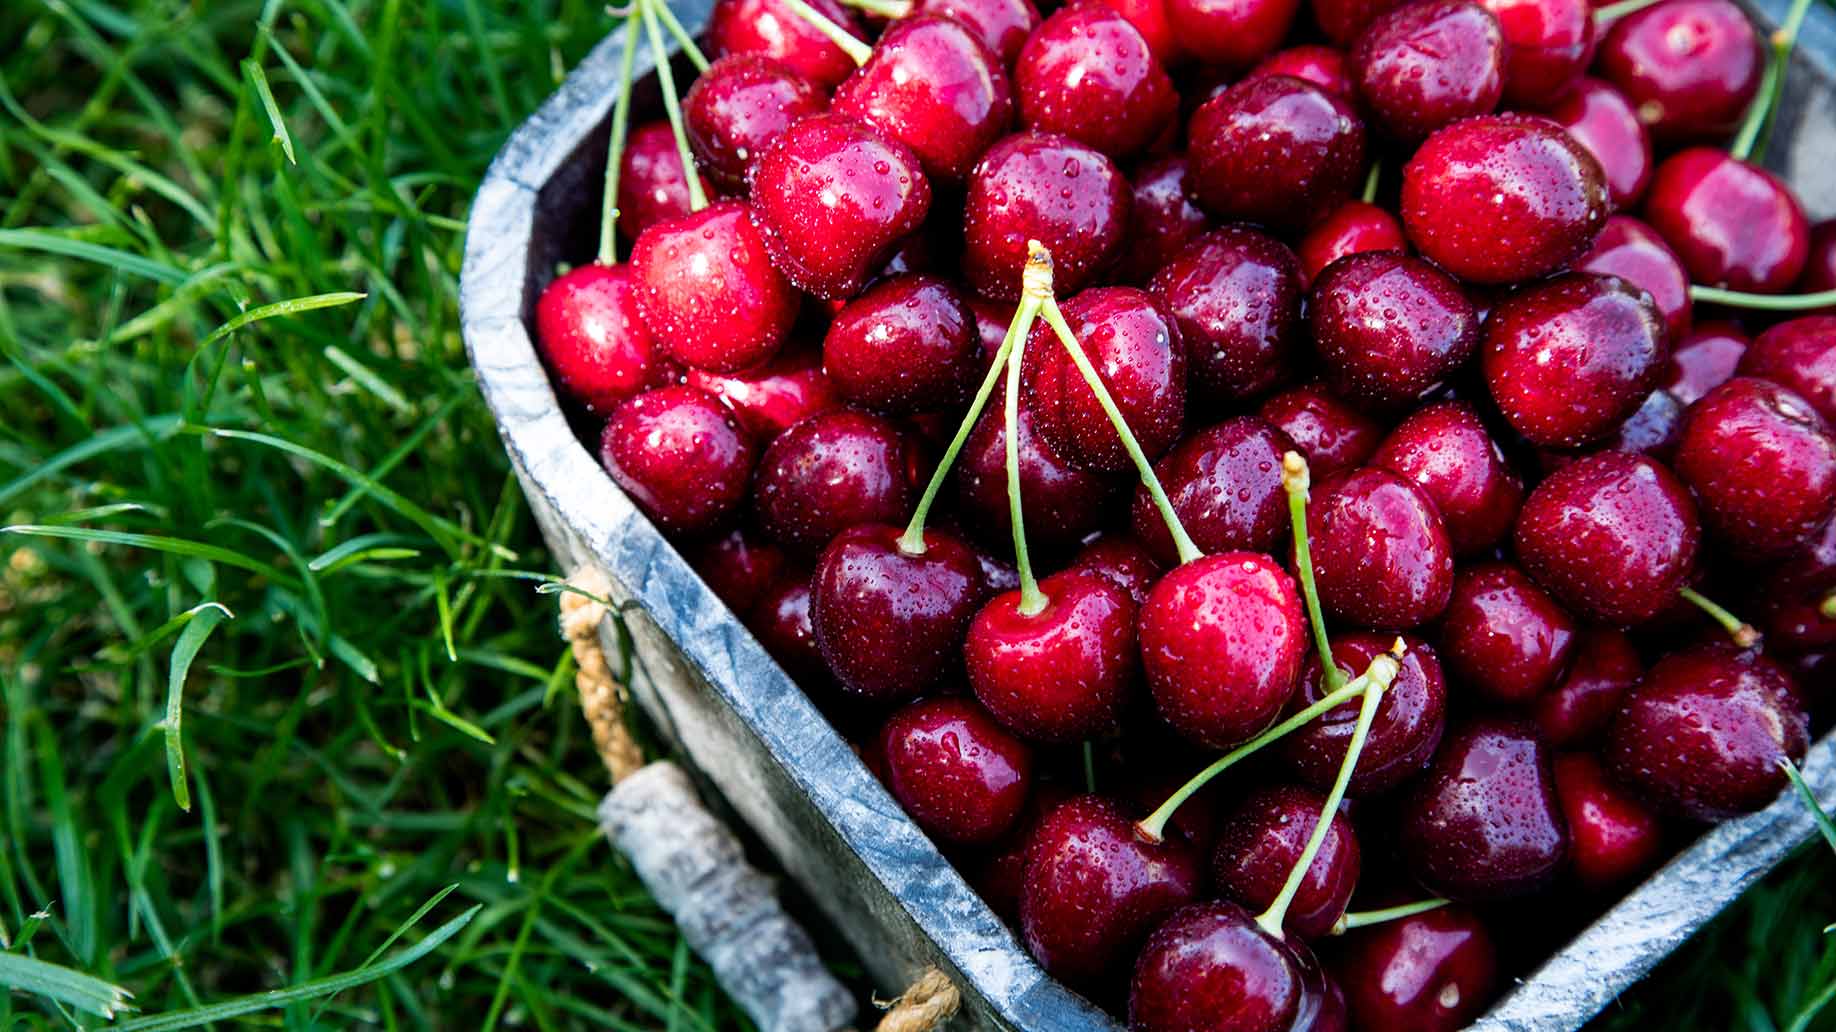 cherries cherry juice melatonin insomnia sleep disorder natural remedy aid